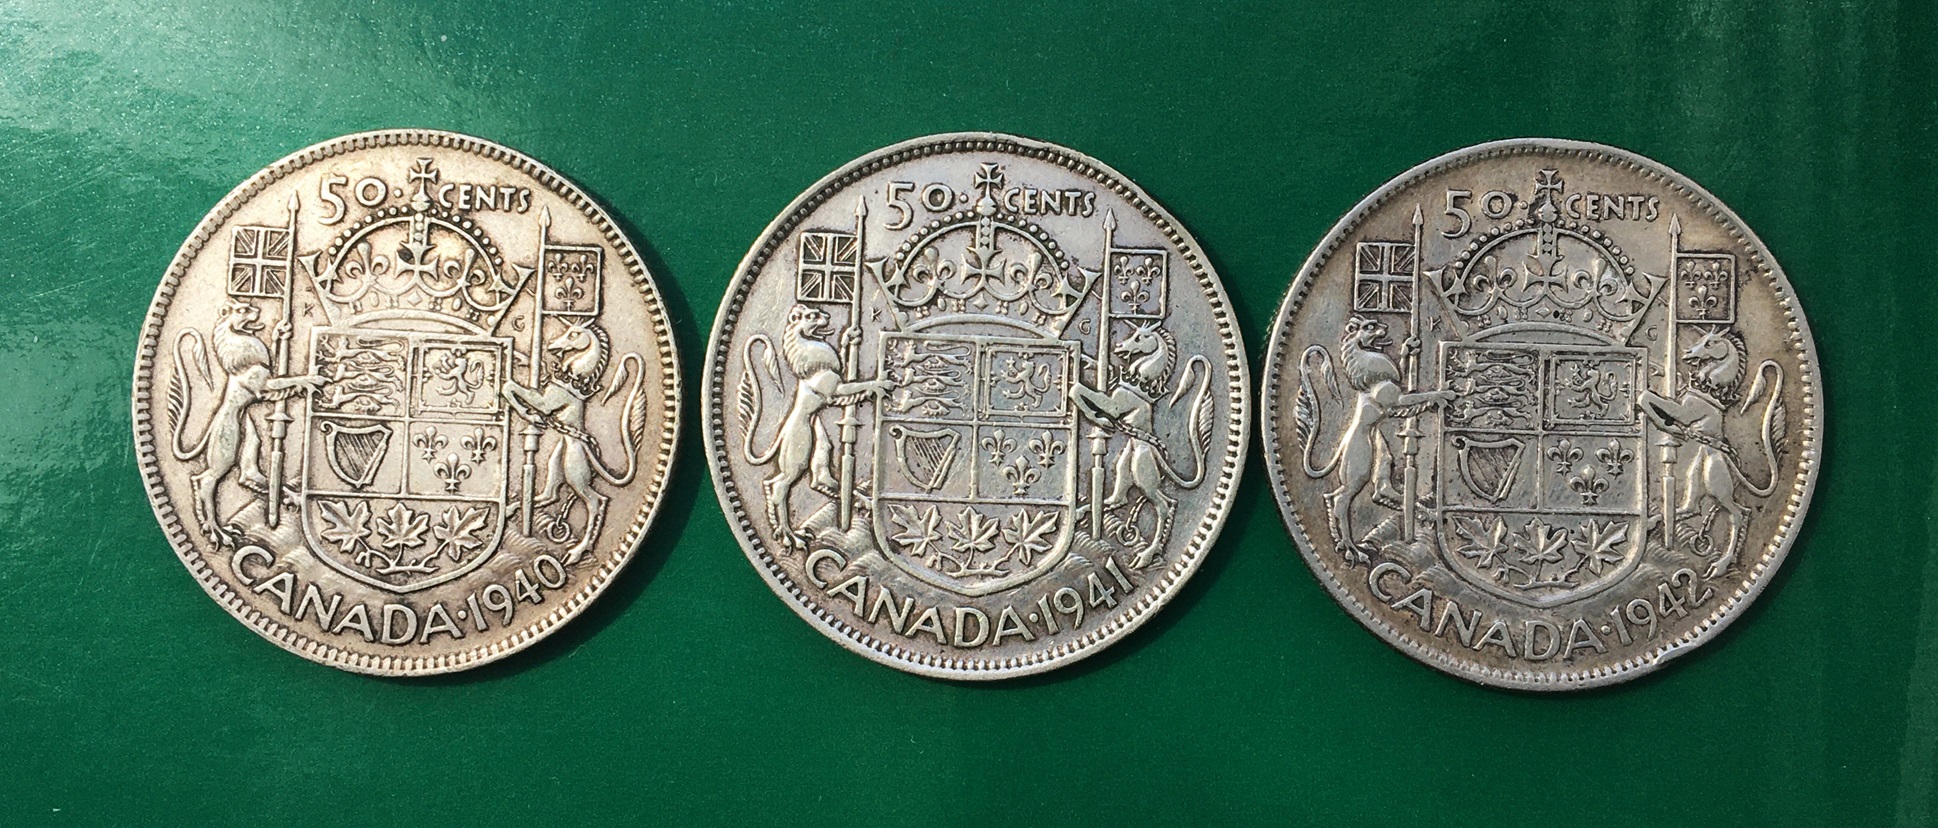 3 50 cents 1940 1941 1942.JPG